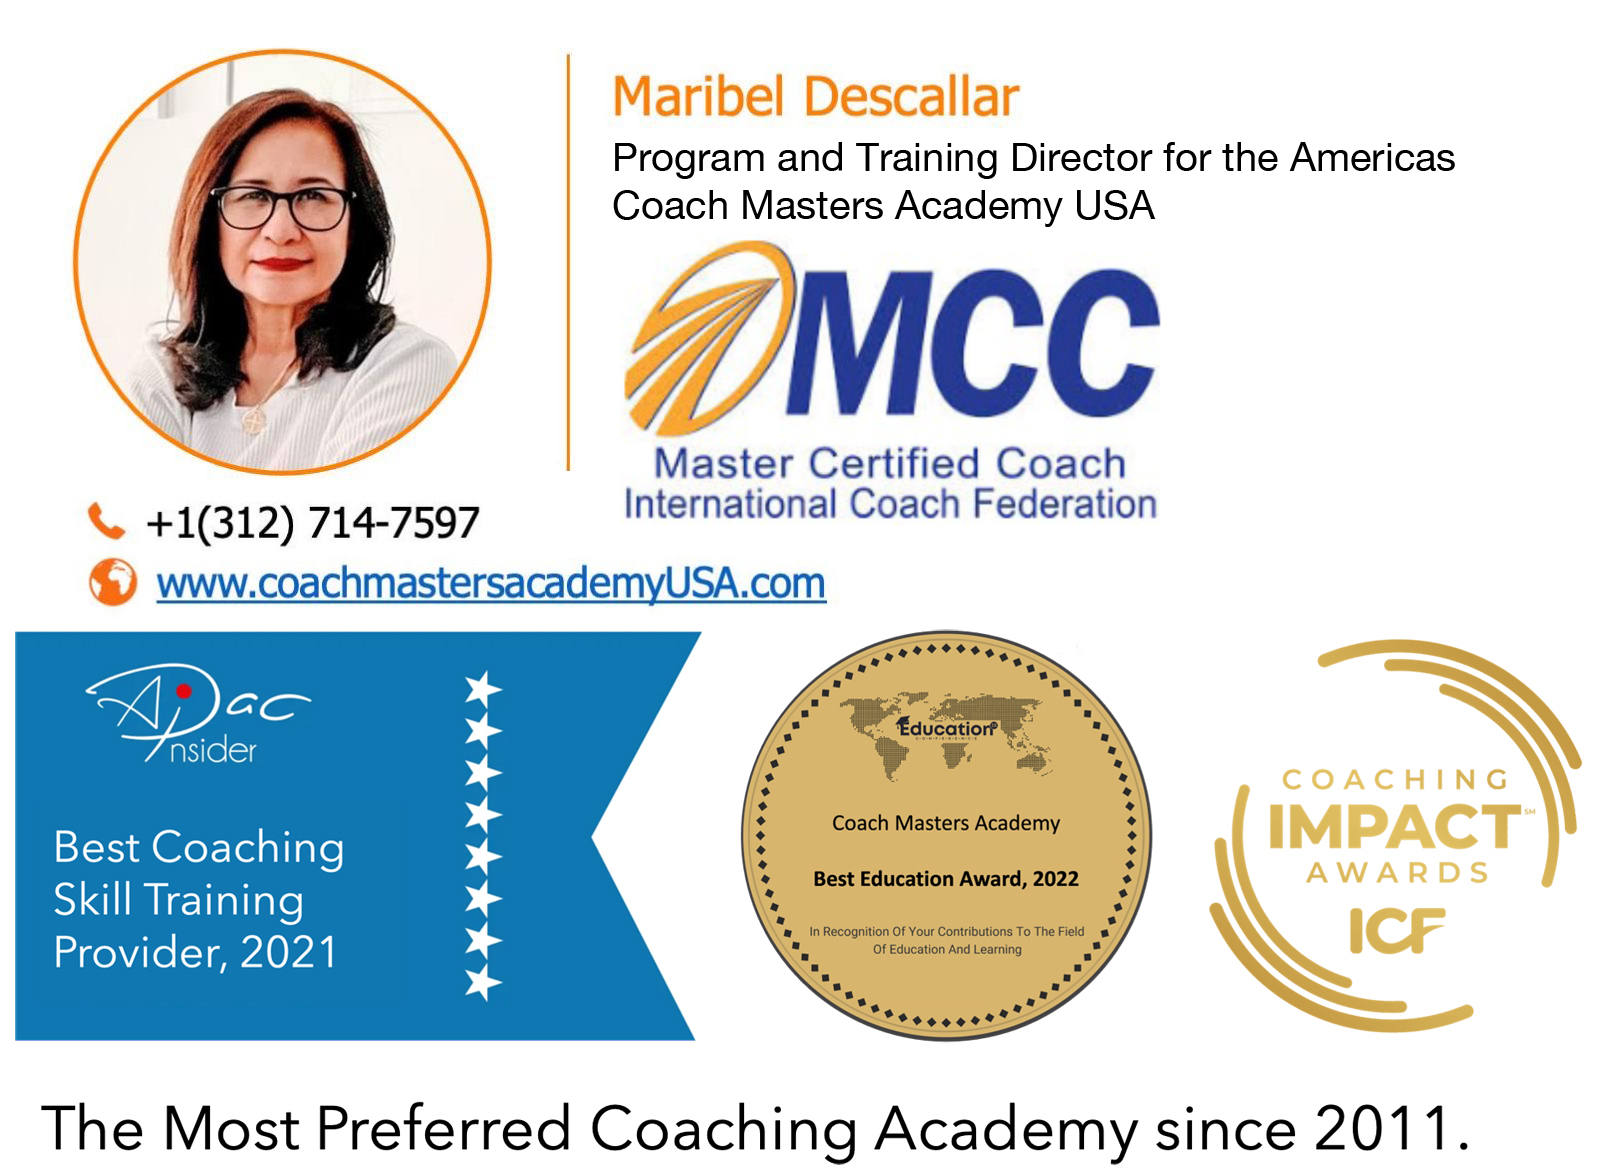 Maribel Descallar, Program and Training Director, Coach Masters Academy USA